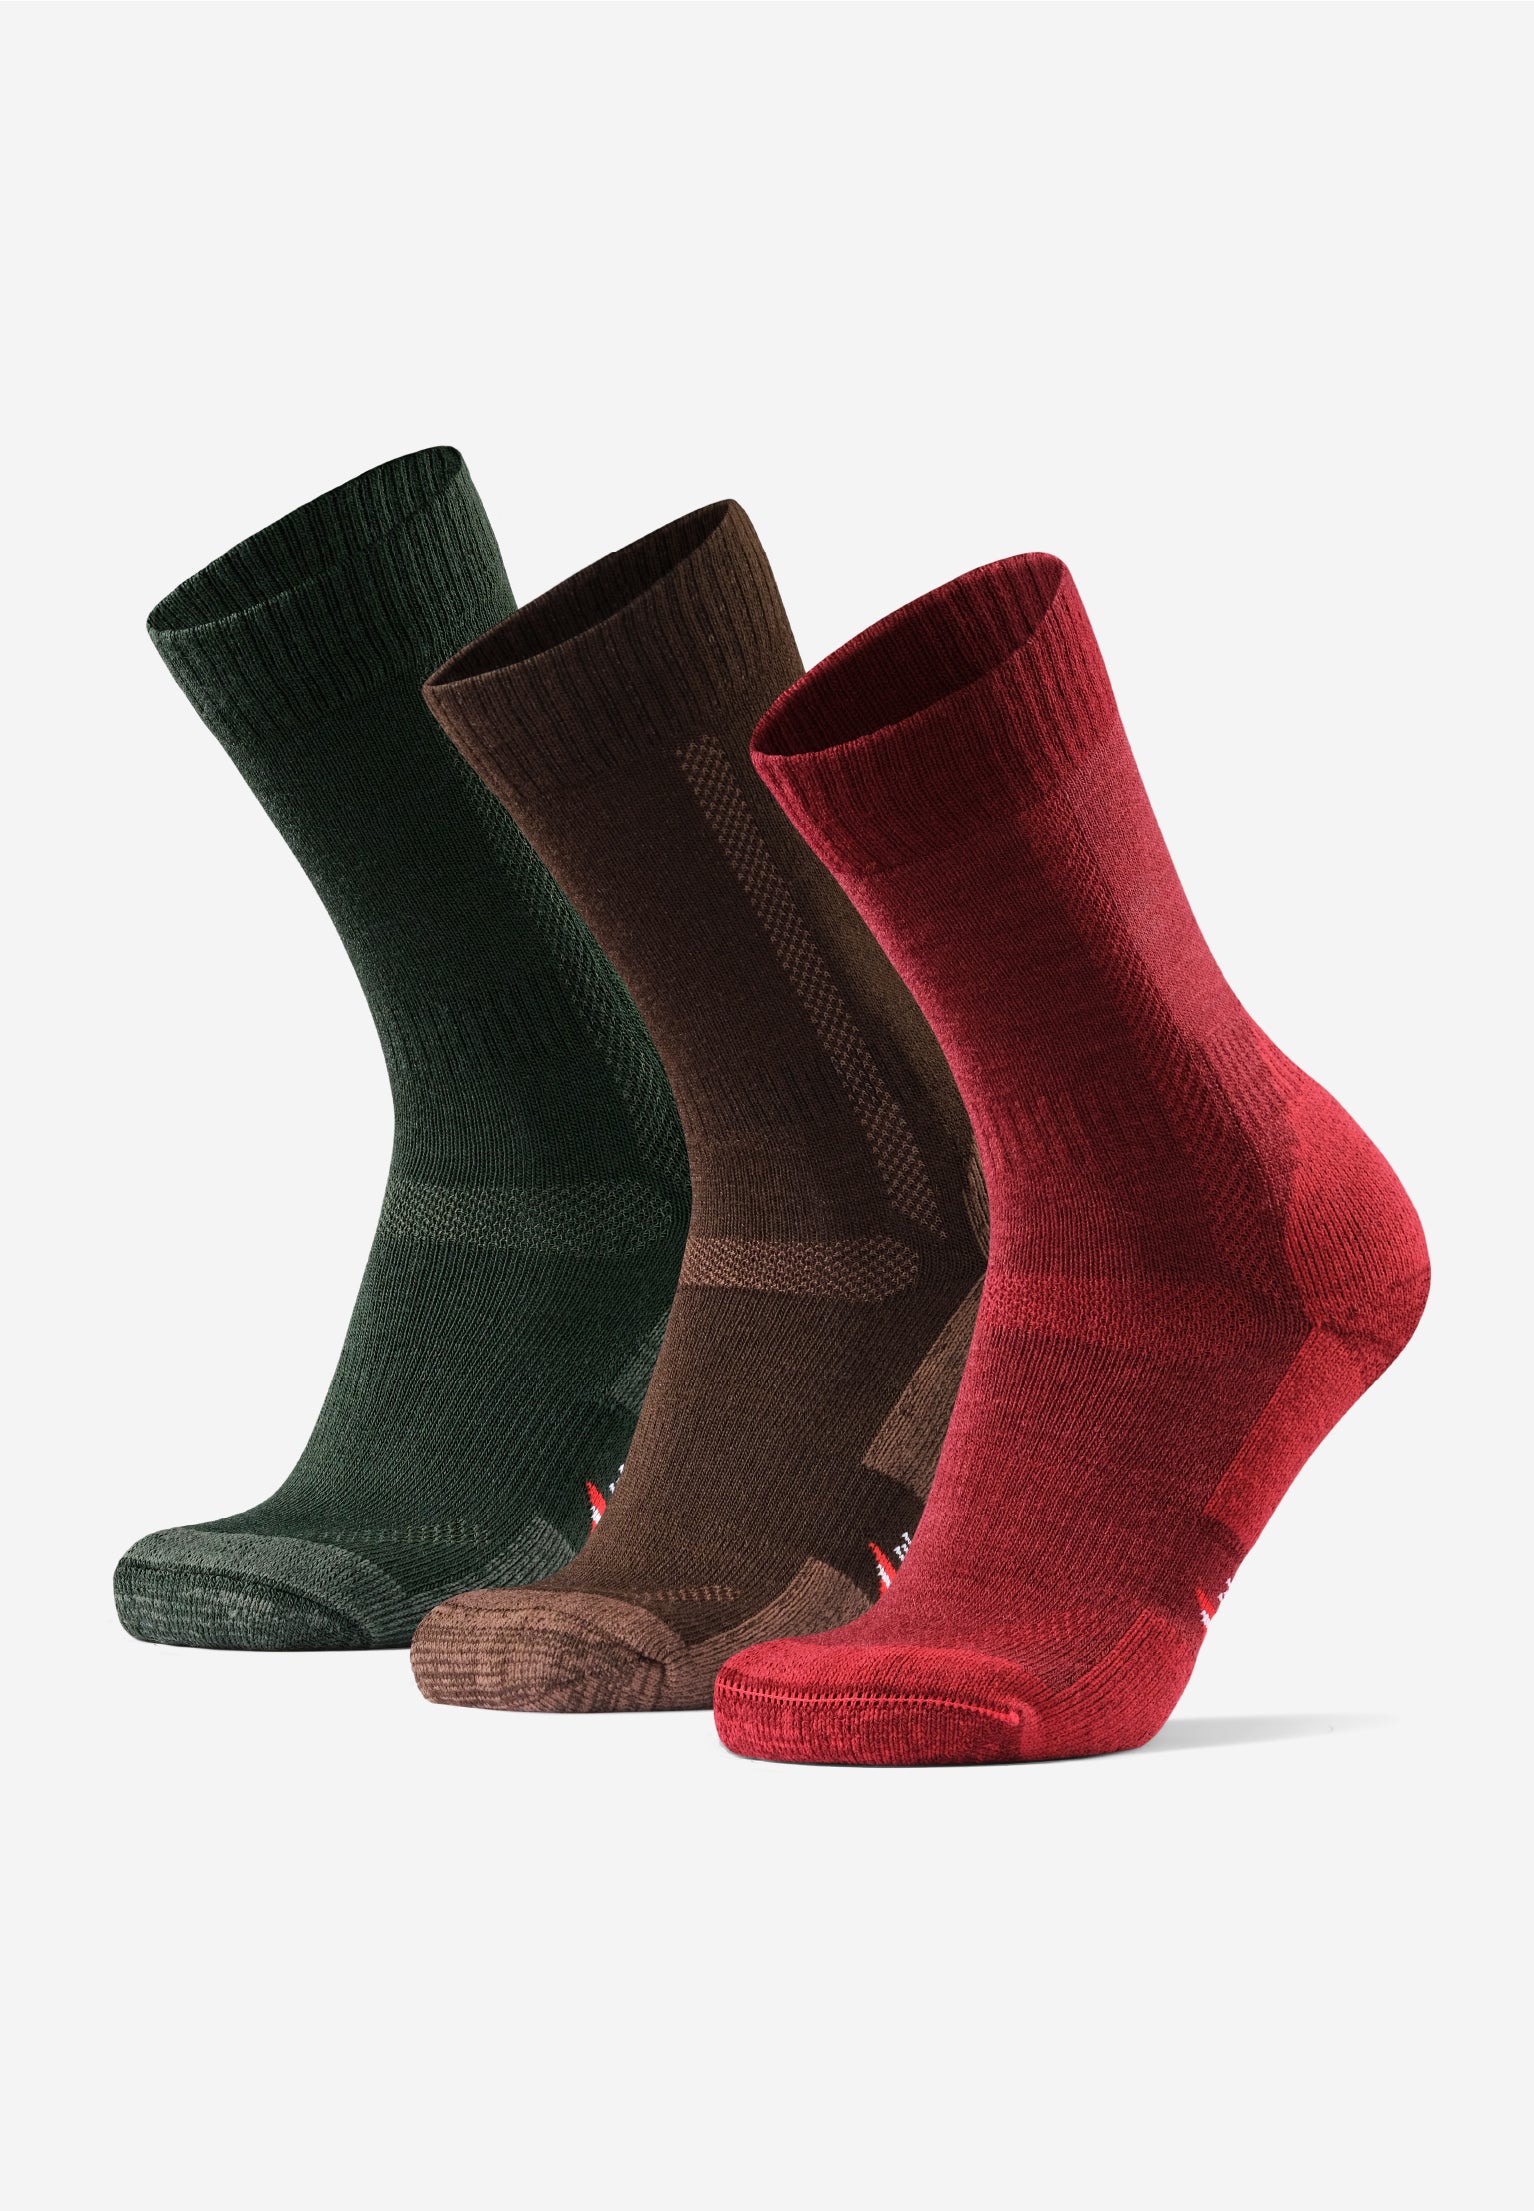 DANISH ENDURANCE Merino Wool Hiking Socks, Cushioned, for Men, Women & Kids  Large Wine Red